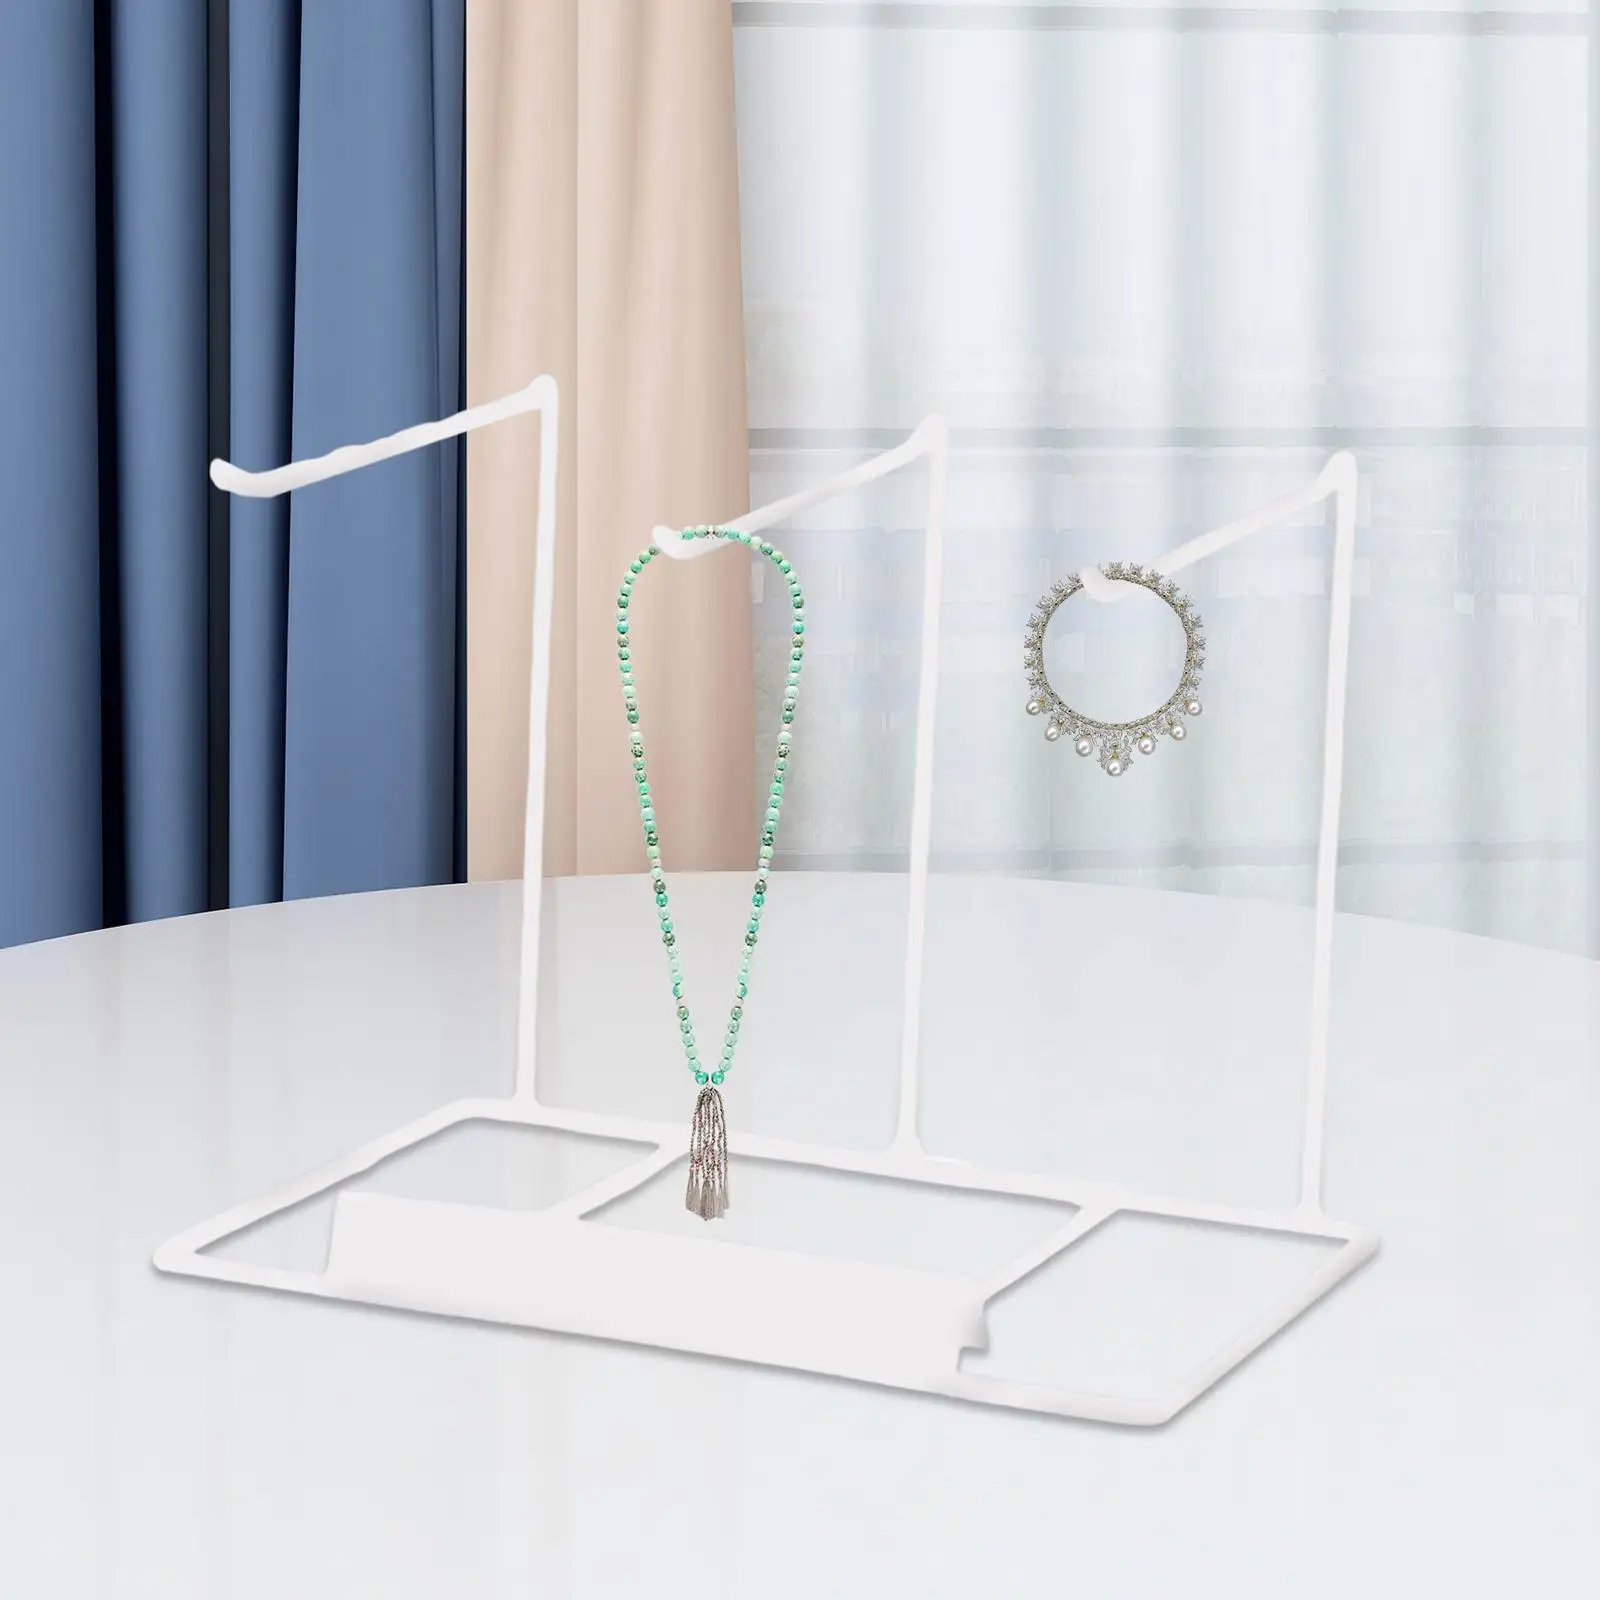 Metal Jewelry Organizer Stand Modern Hanger Rack Display Holder Hook for Necklaces Hairbands Trinkets Pendants Showcase